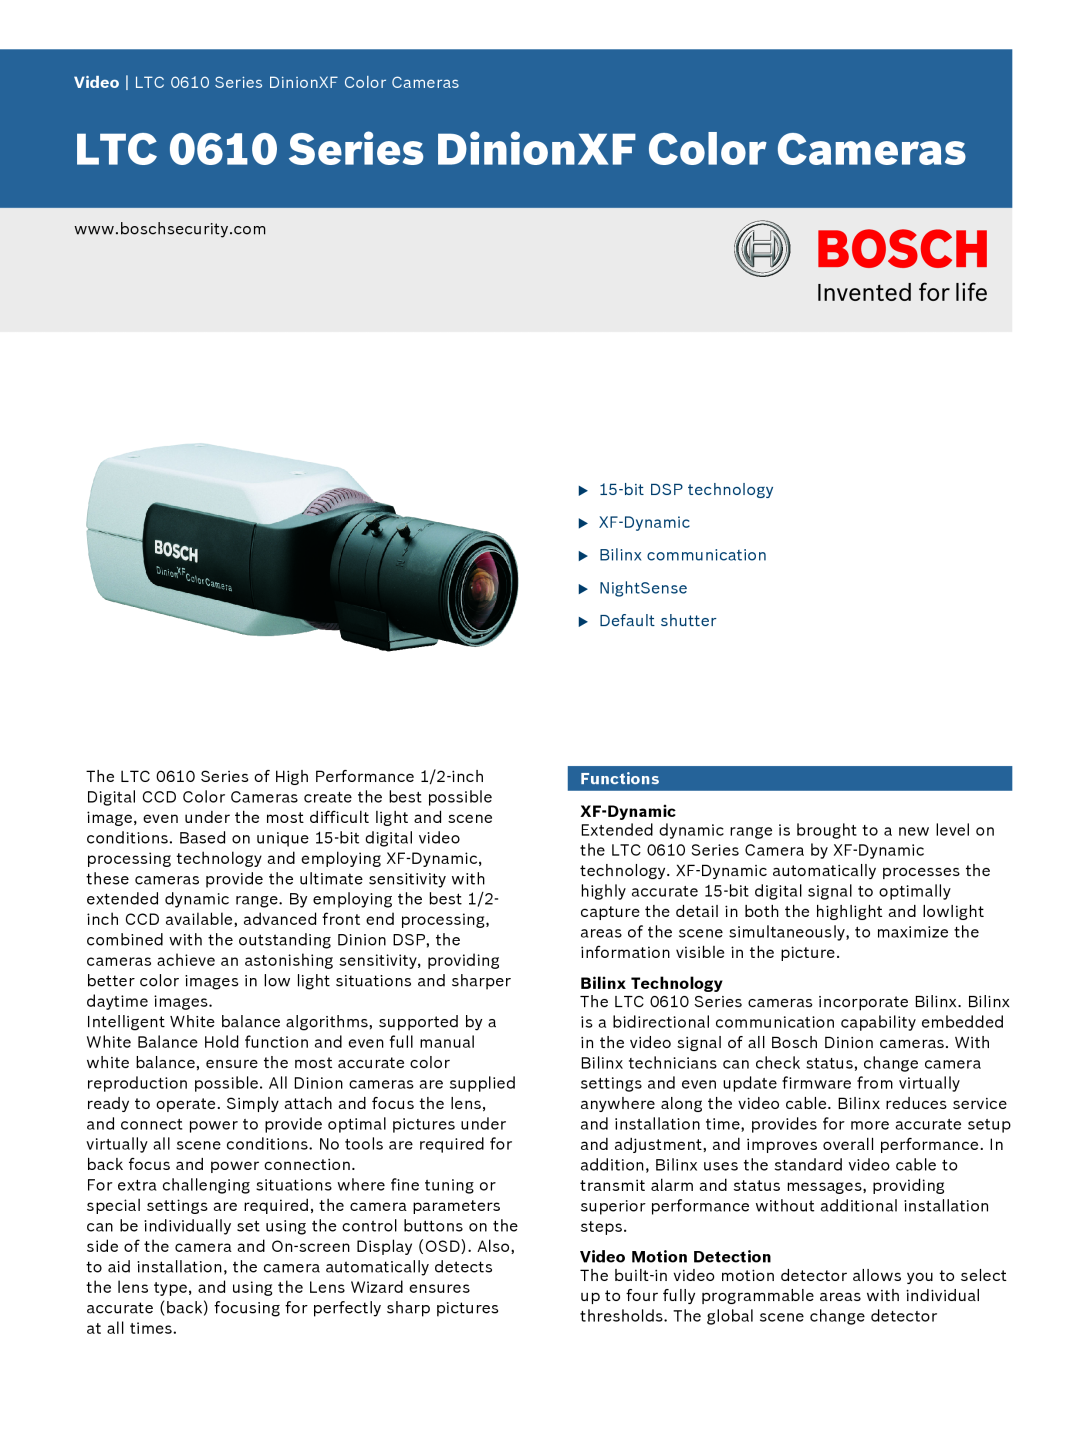 Bosch Appliances manual Video LTC 0610 Series DinionXF Color Cameras, Functions, XF-Dynamic, Bilinx Technology 